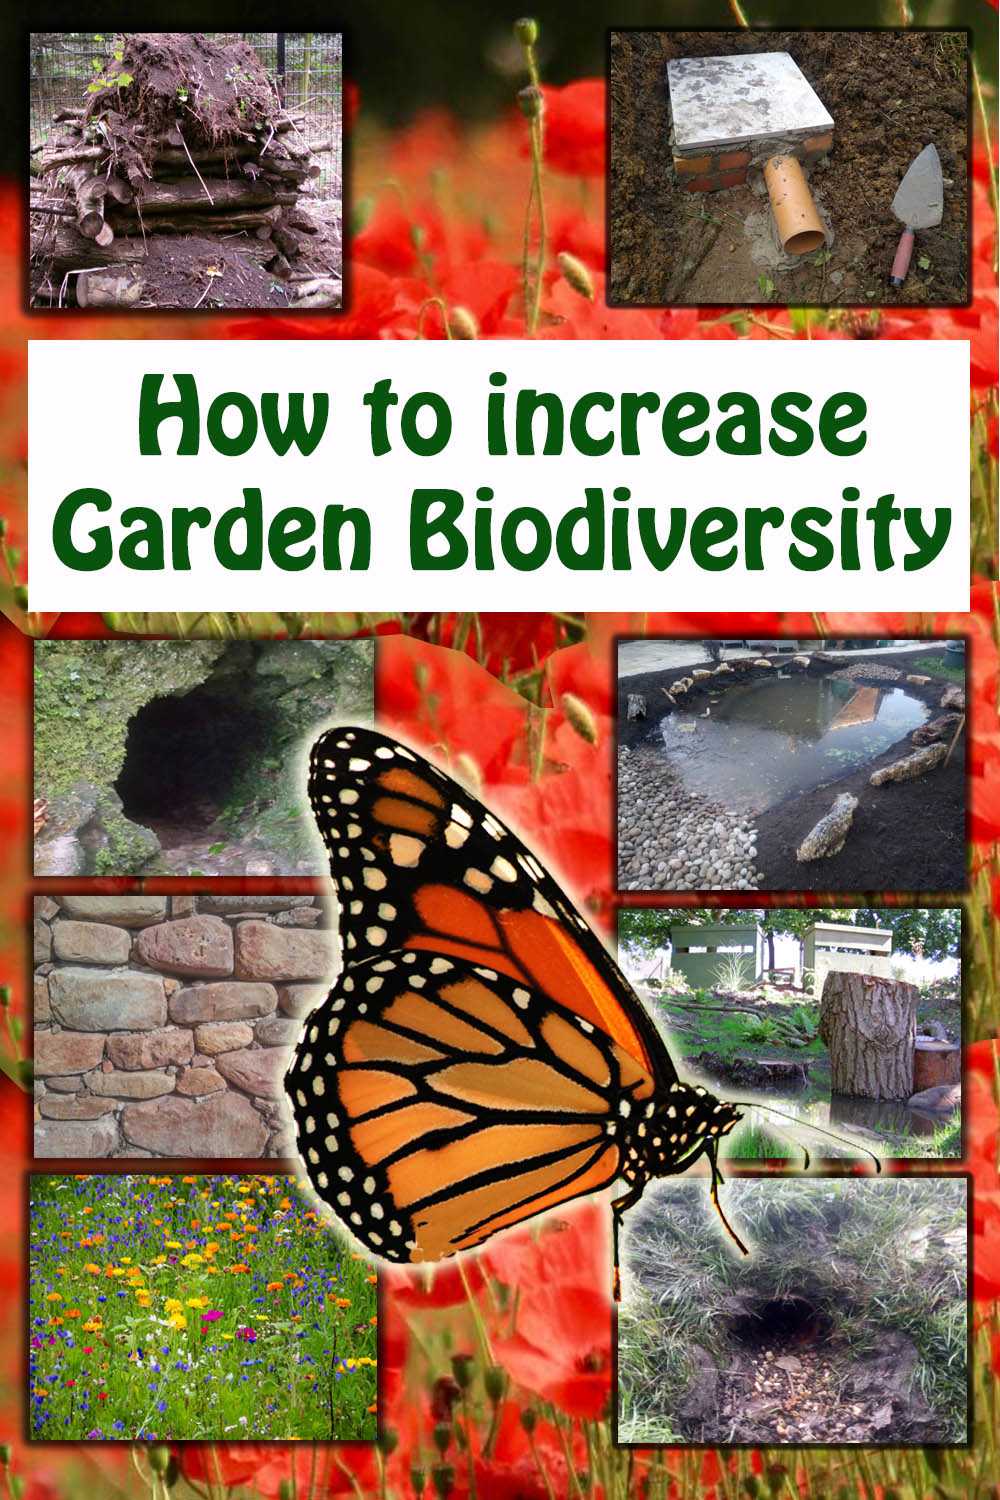 How to increase garden biodiversity